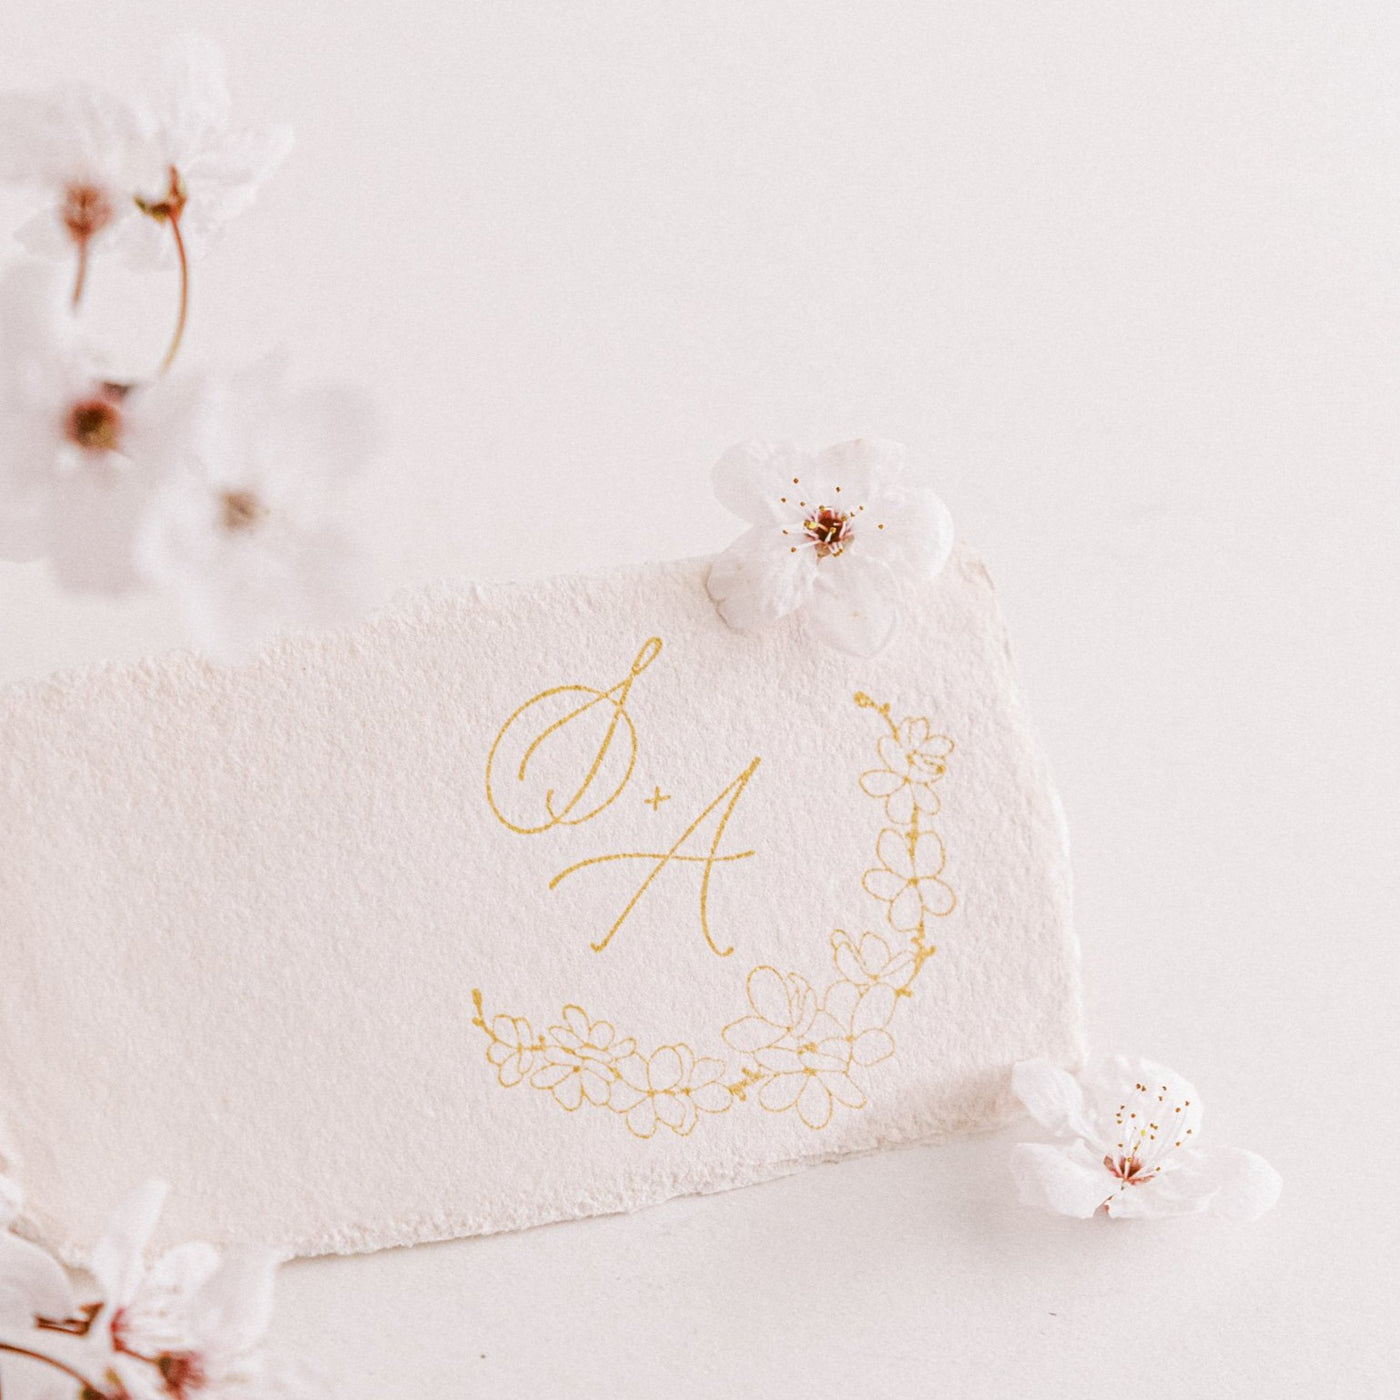 Emika Cherry Blossom Monogram Rubber Stamp for Fine Art Wedding Invitations | 'Sakura' Cherry Blossom Embellishments for Blush Pink Spring Wedding | Heirloom Seals